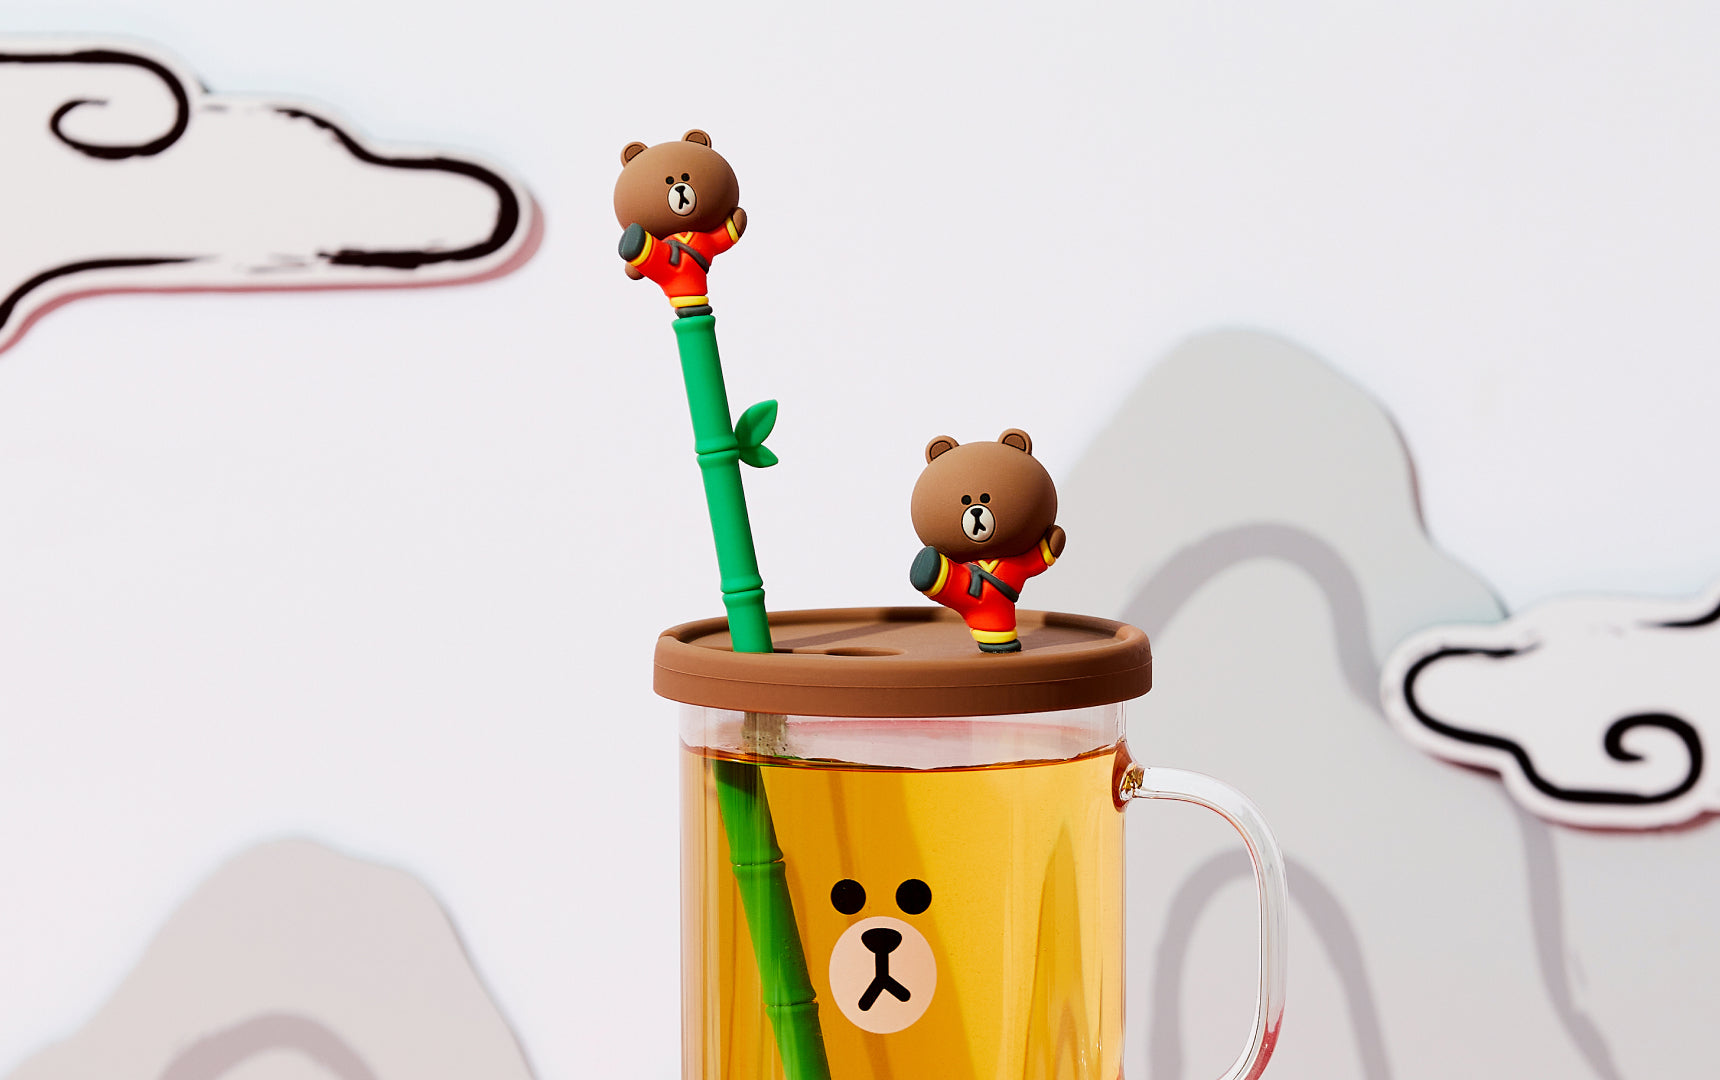 LINE FRIENDS with Kung Fu Panda Po Mug & Tea Bag Holder Set - LINE  FRIENDS_US